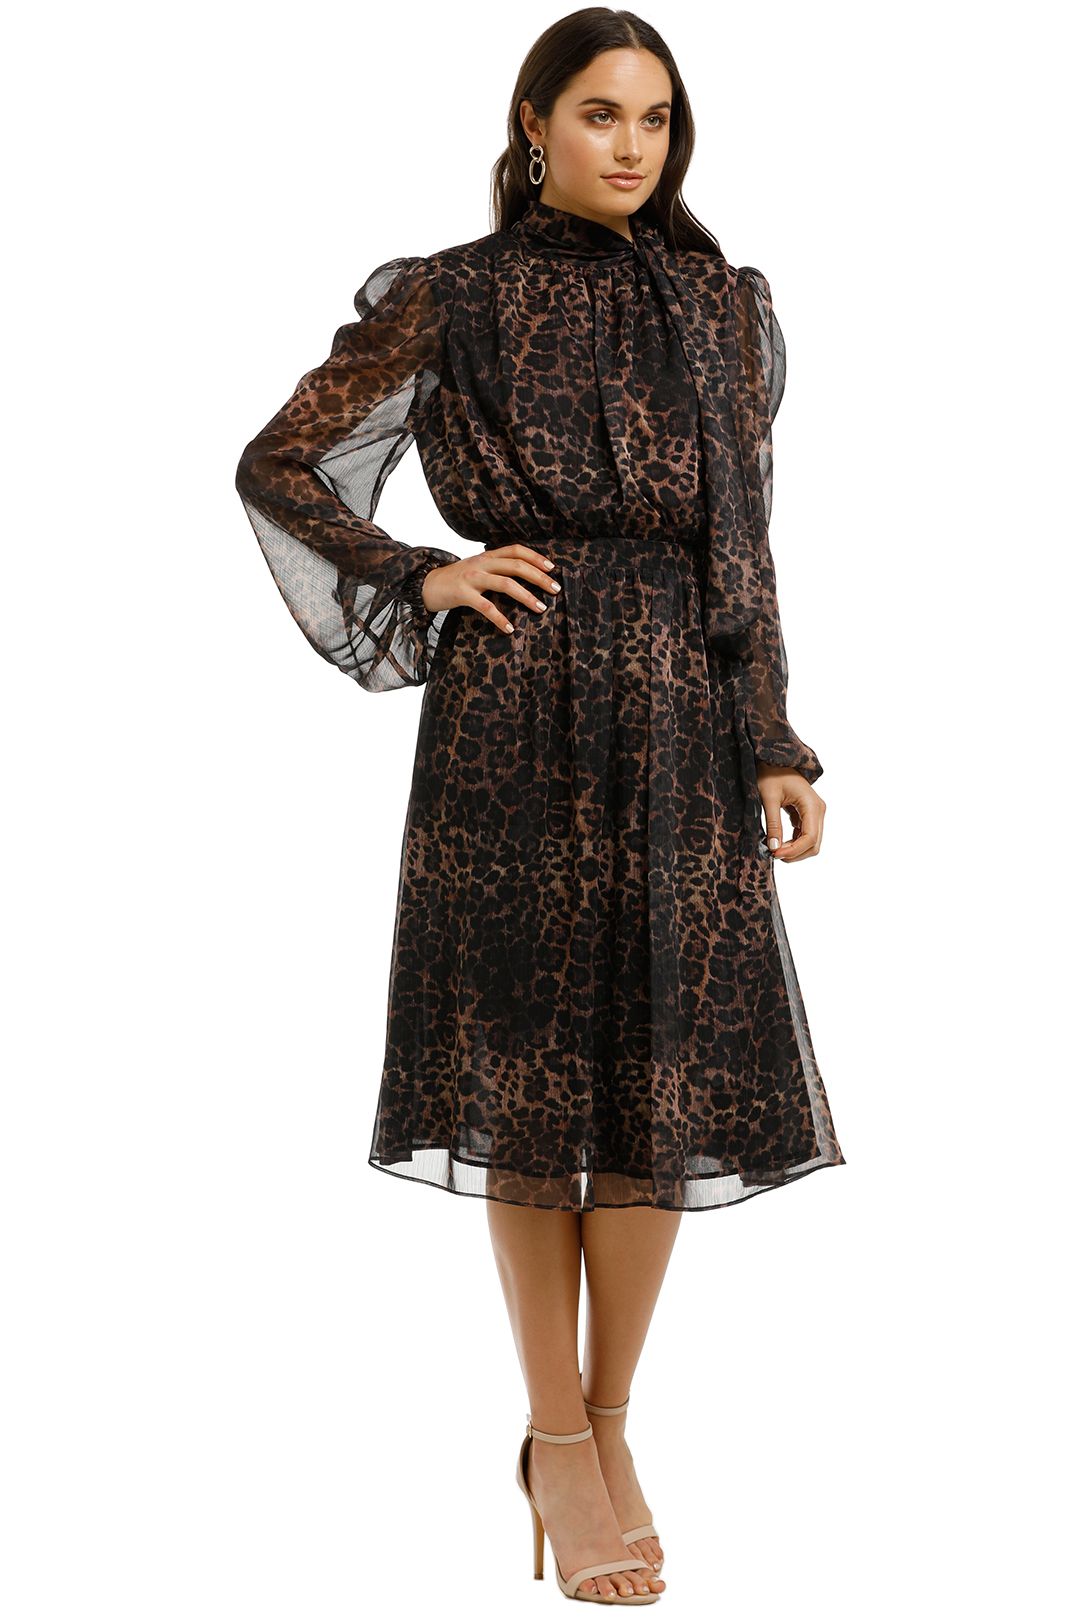 Misha-Collection-Sofia-Dress-Leopard-Side